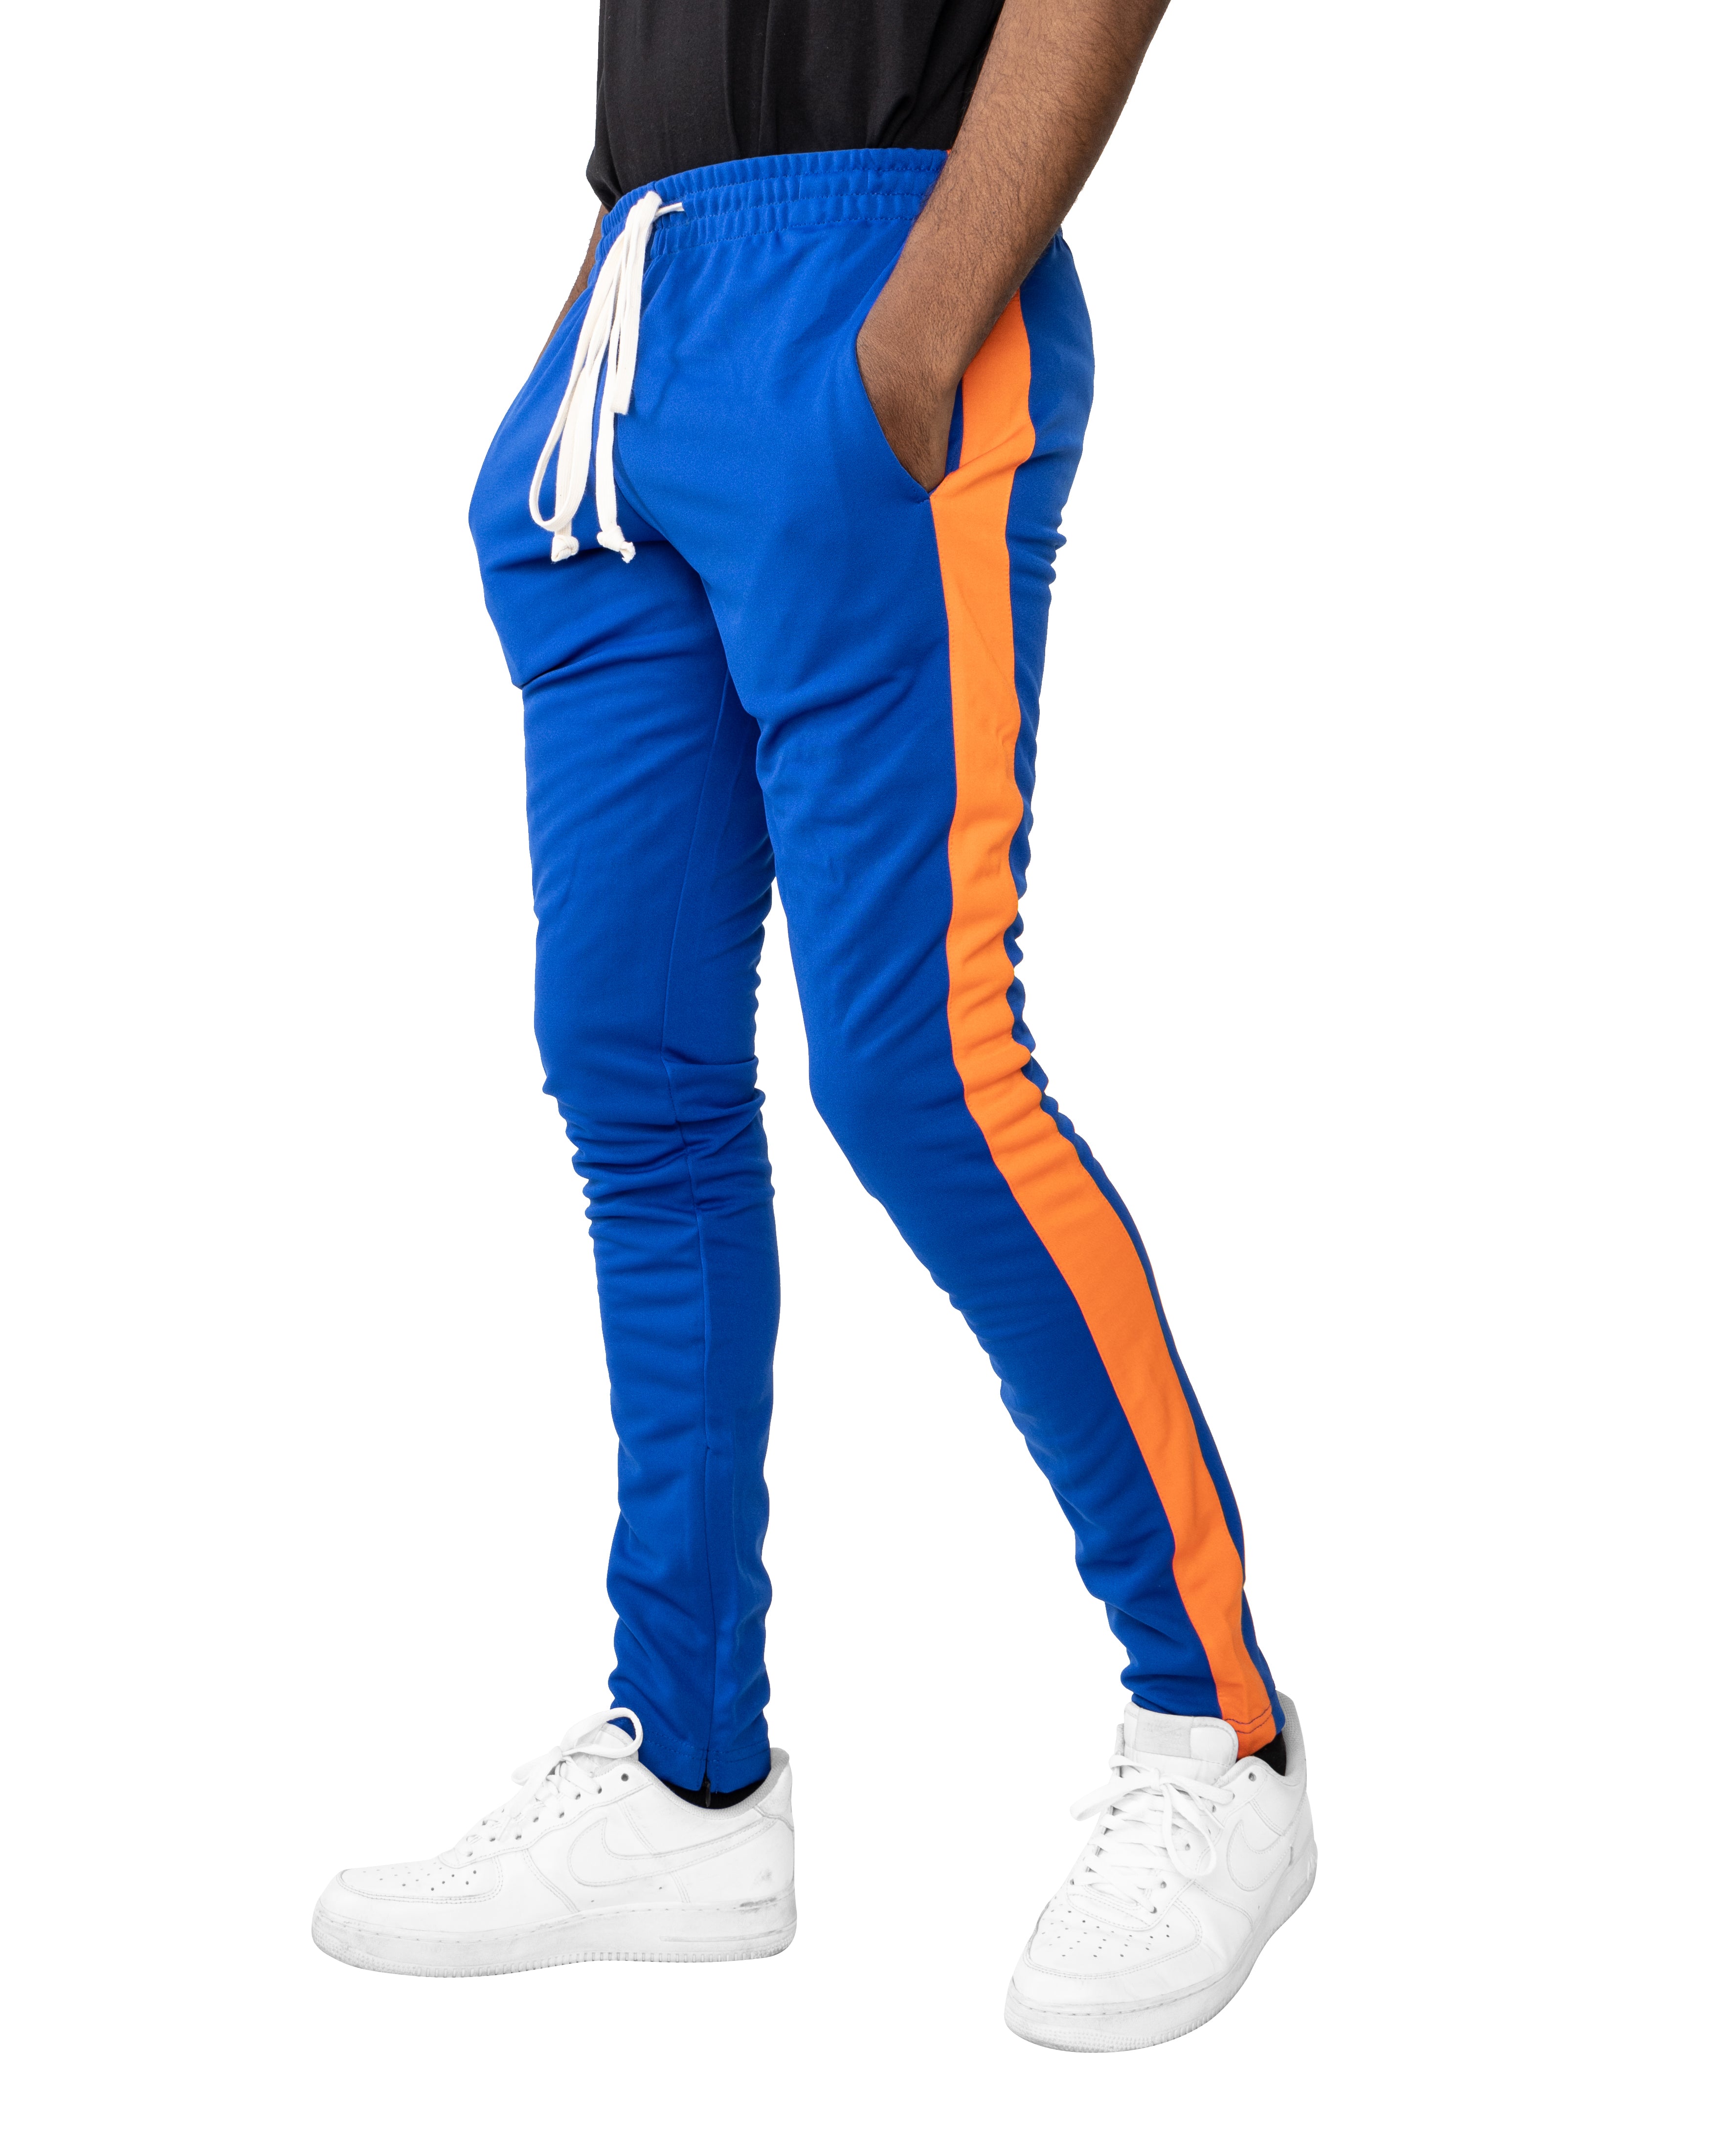 Buy Men's Blue Track Pants Online at Bewakoof